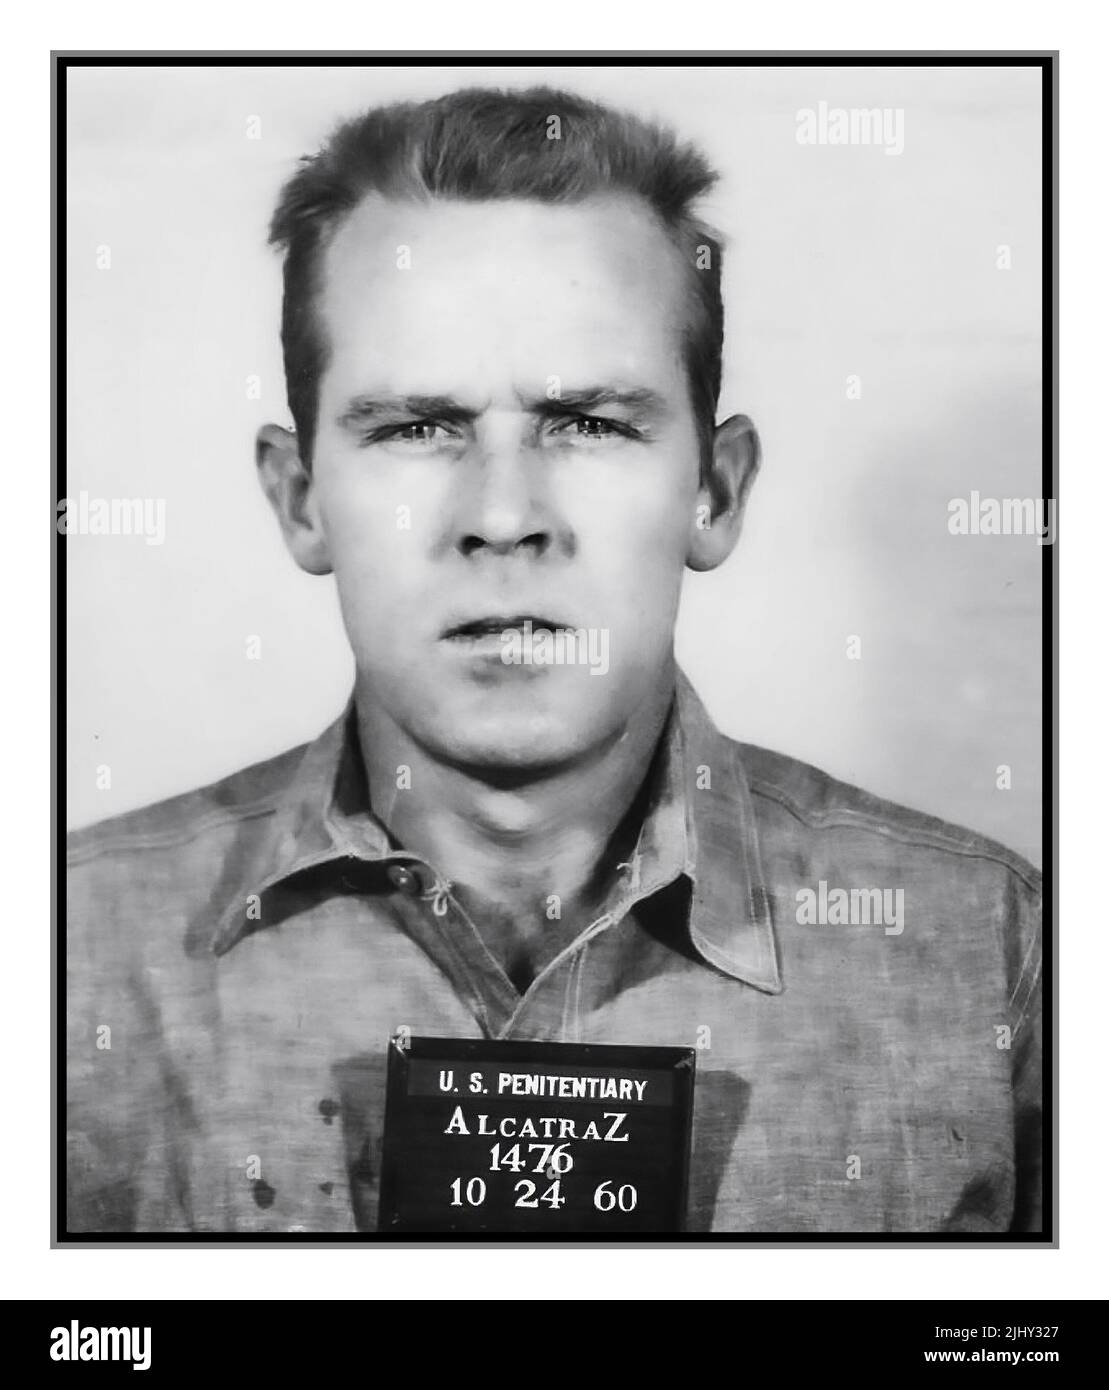 ALACATRAZ GEFÄNGNIS FLUCHT MUGSHOT GEFANGENER John Anglin Nr. 1476, berühmter US-Krimineller für die Flucht aus Alcatraz 1960 Alcatraz San Francisco Kalifornien USA Stockfoto